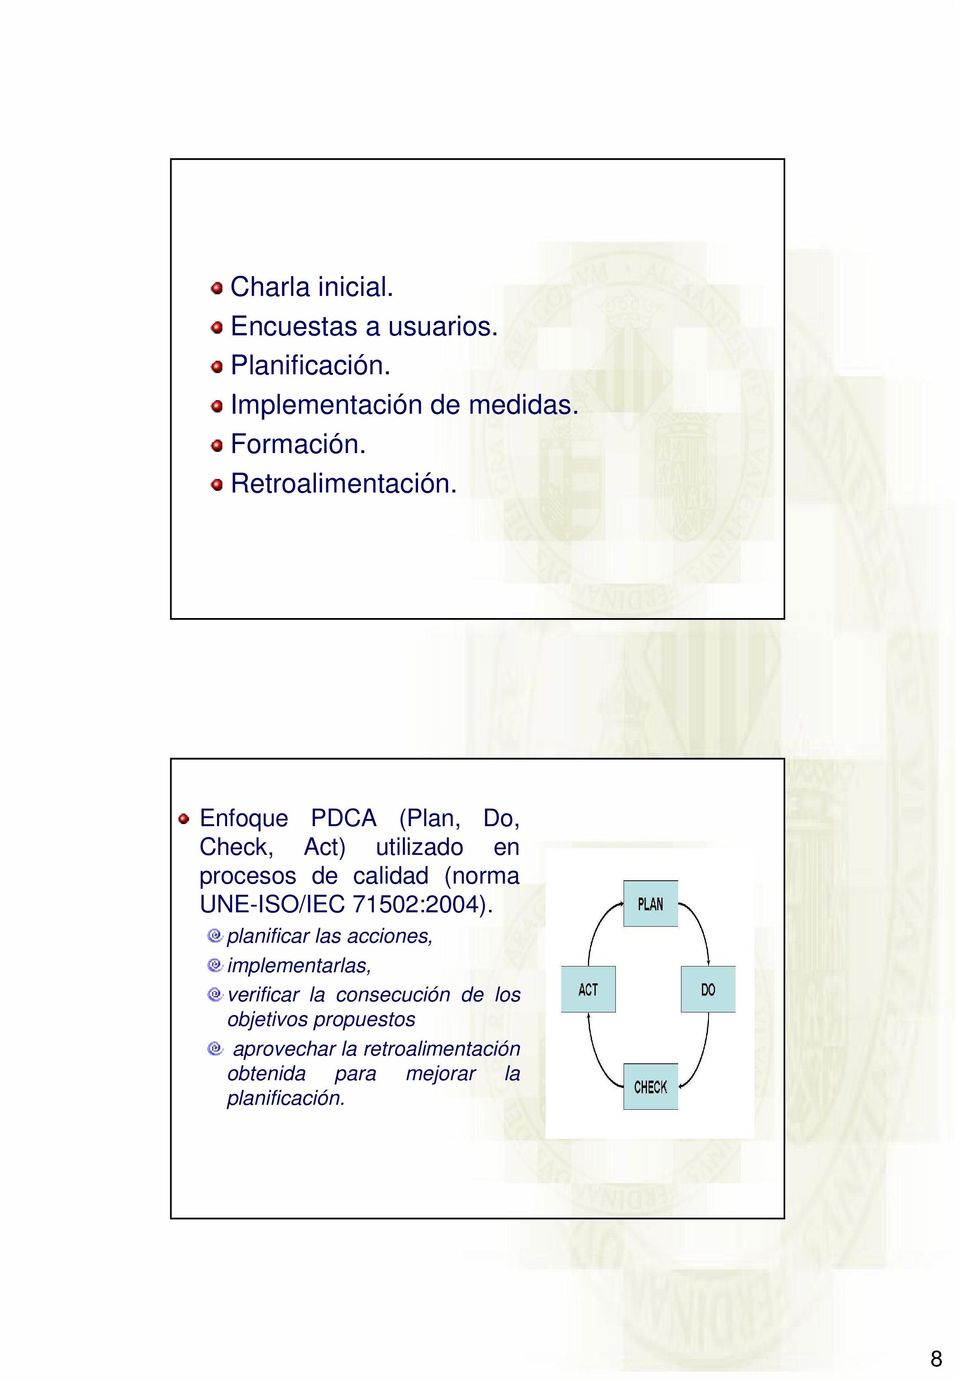 Enfoque PDCA (Plan, Do, Check, Act) utilizado en procesos de calidad (norma UNE-ISO/IEC